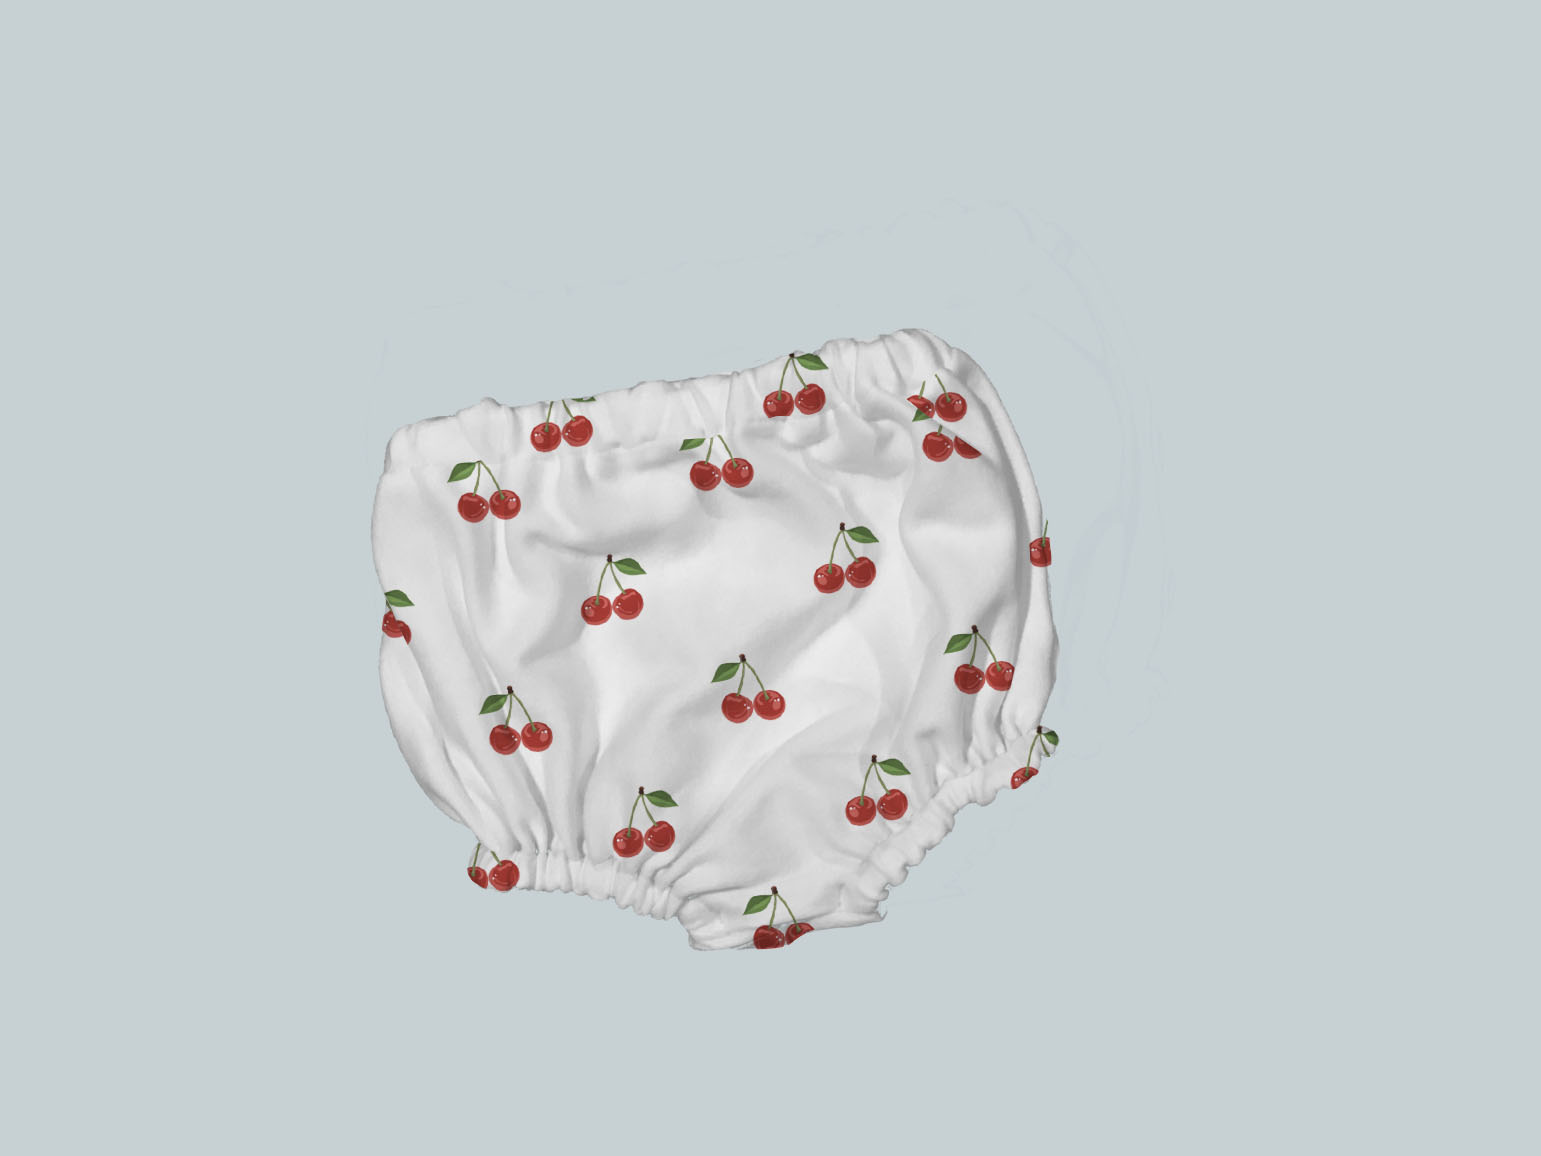 Bummies/Diaper Cover - Cheery Cherrie